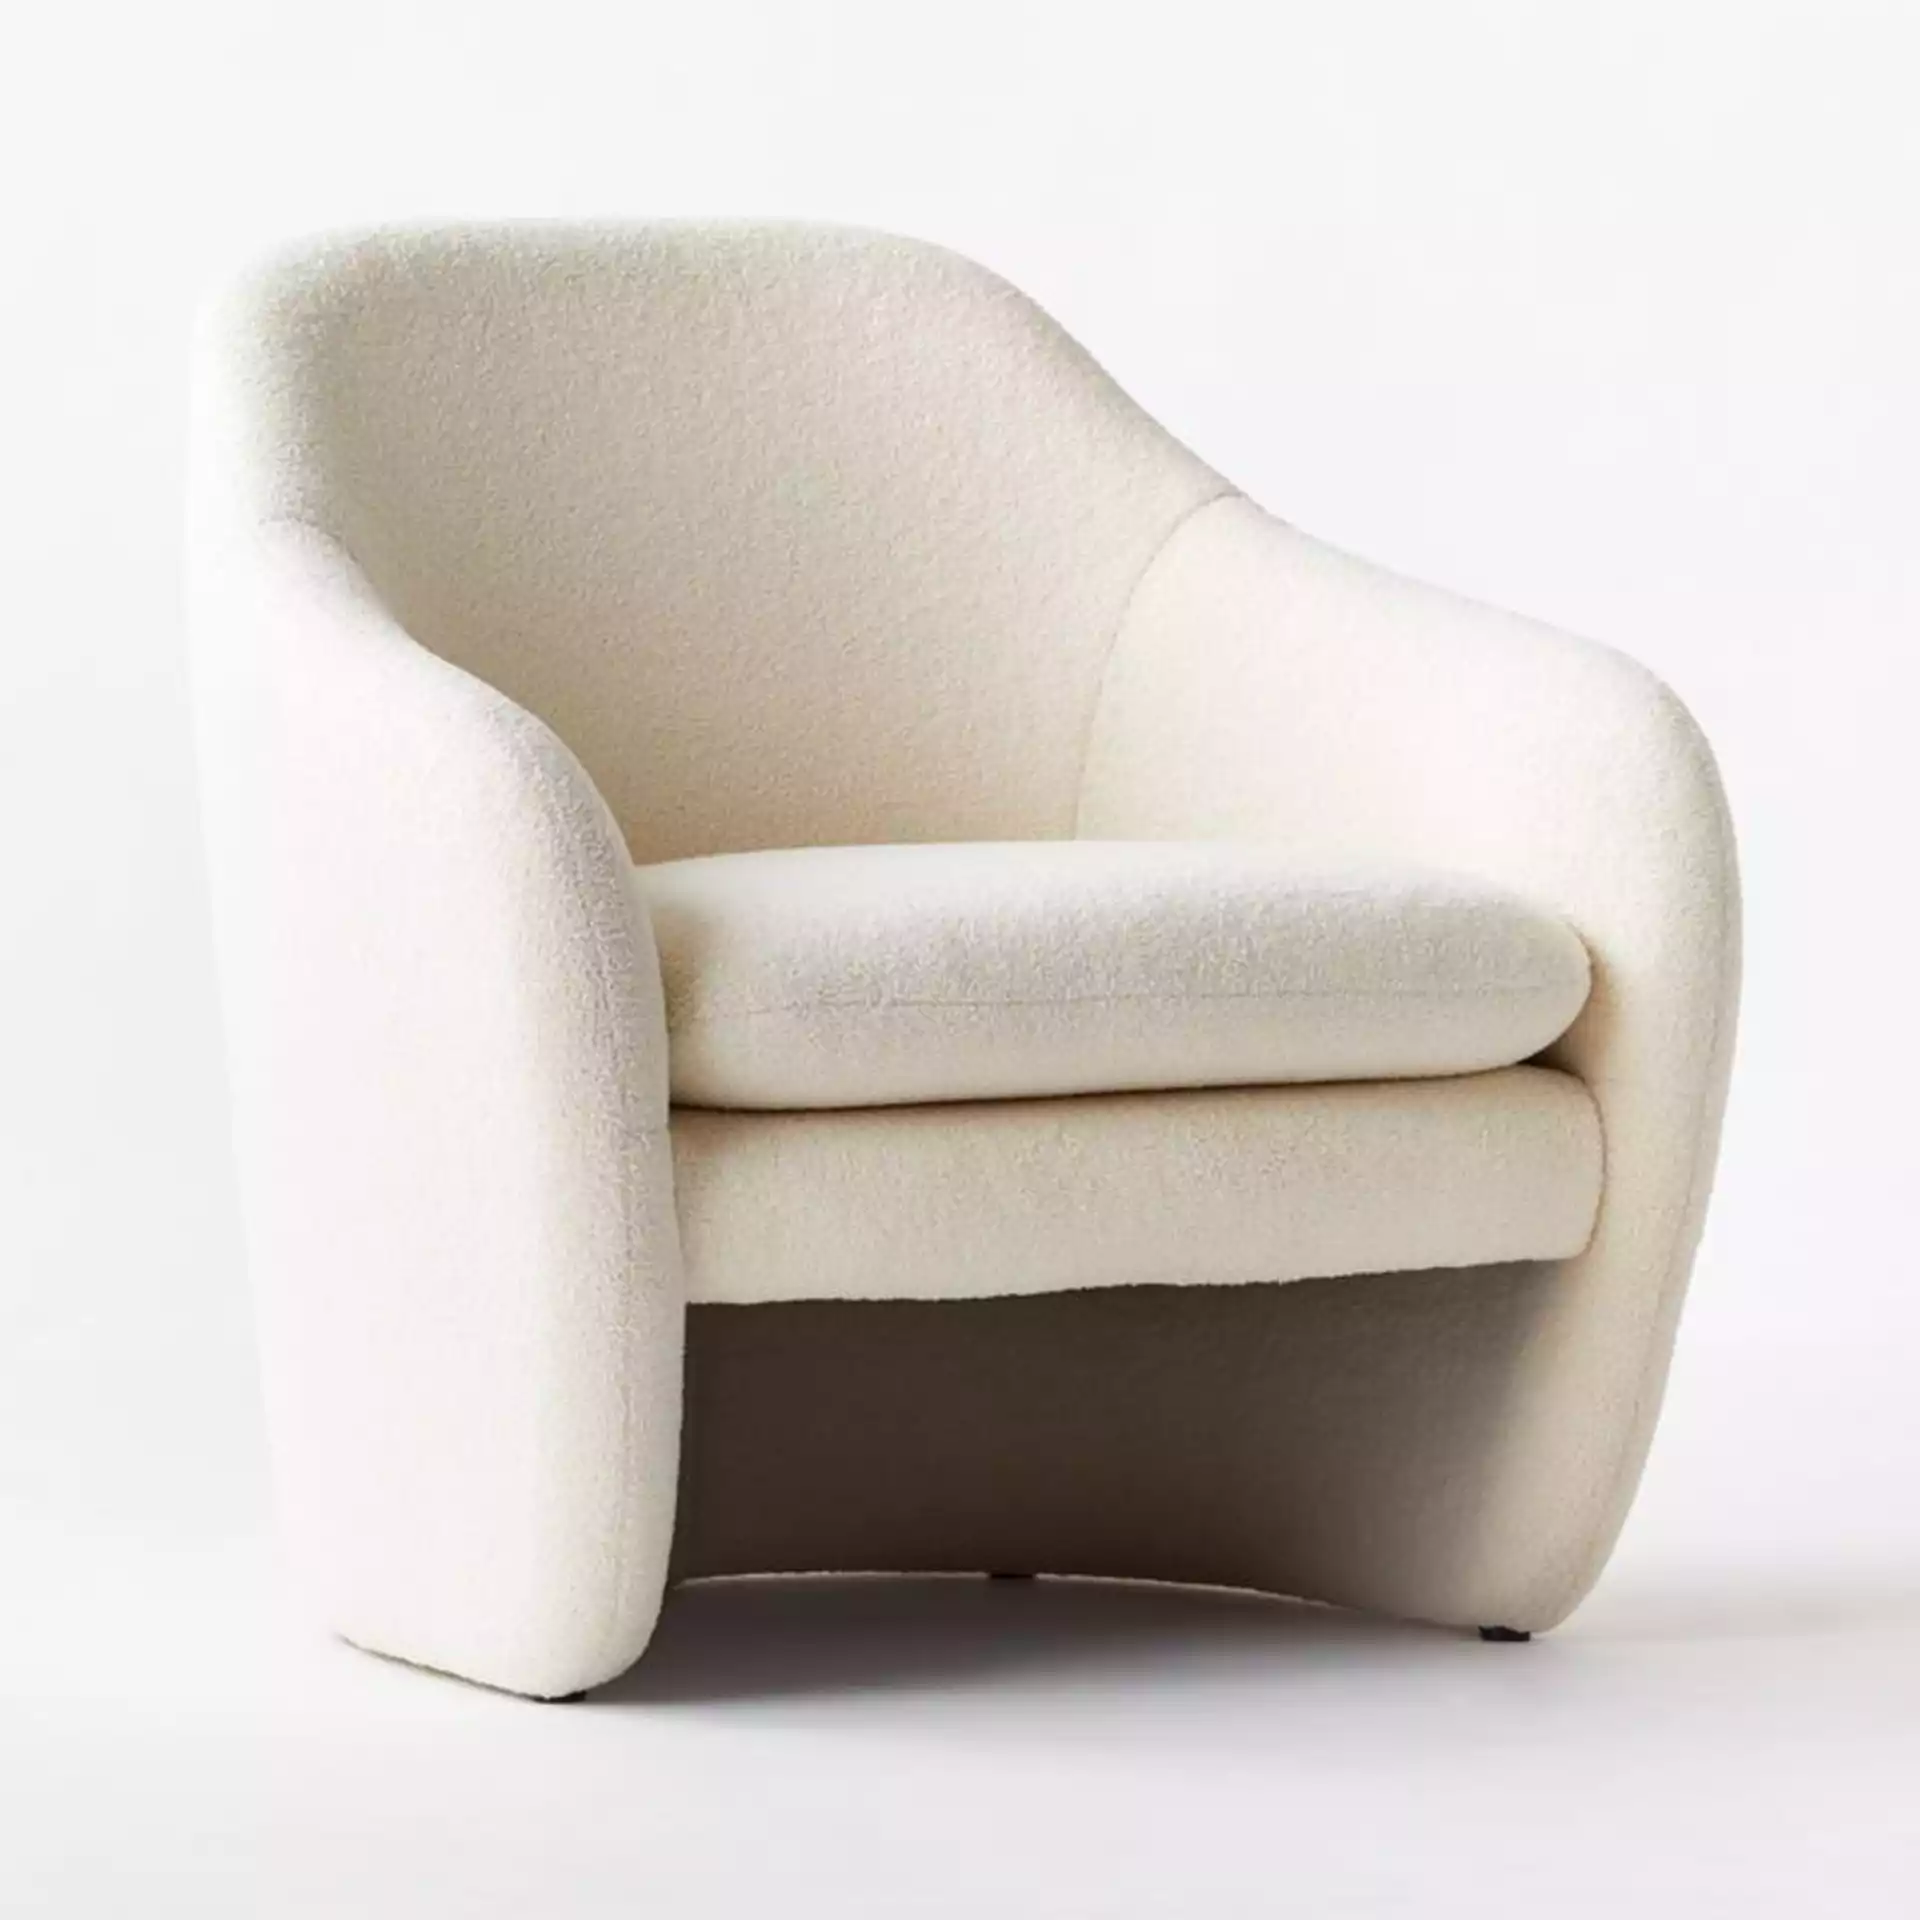 Pavia Lounge Chair RESTOCK Mid January 2022